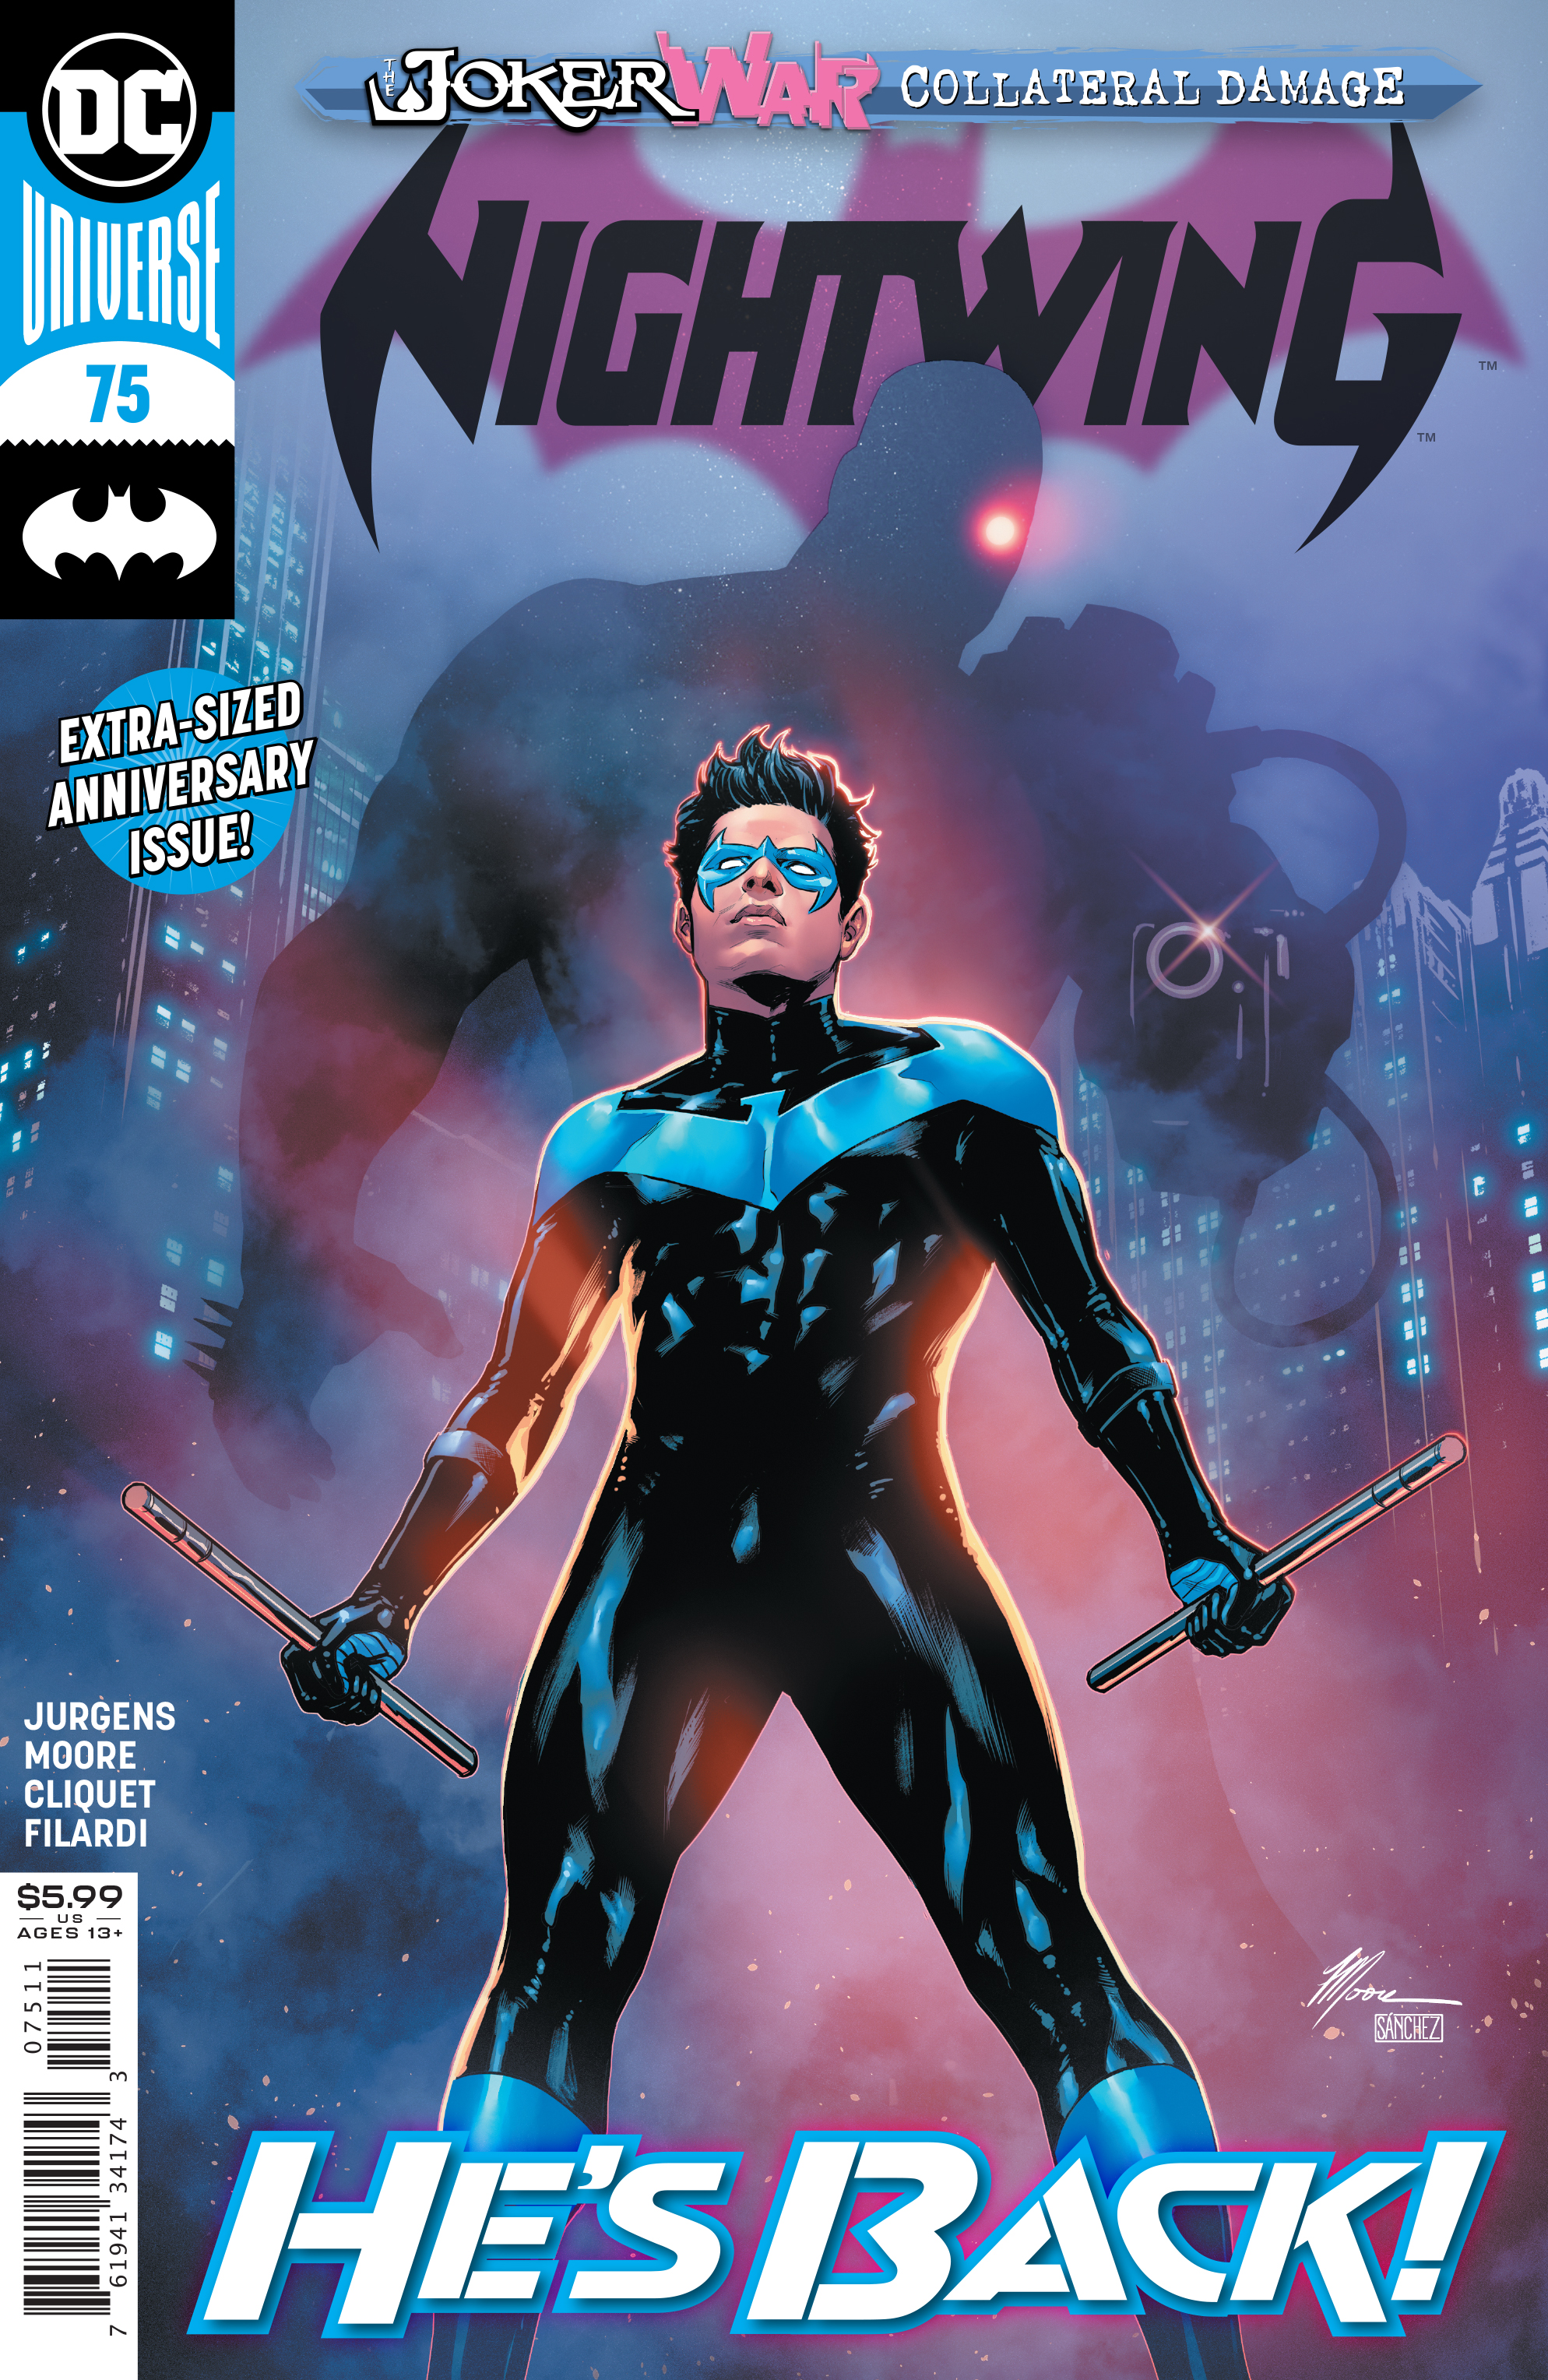 Nightwing #75 Cover A Travis Moore (Joker War) (2016)